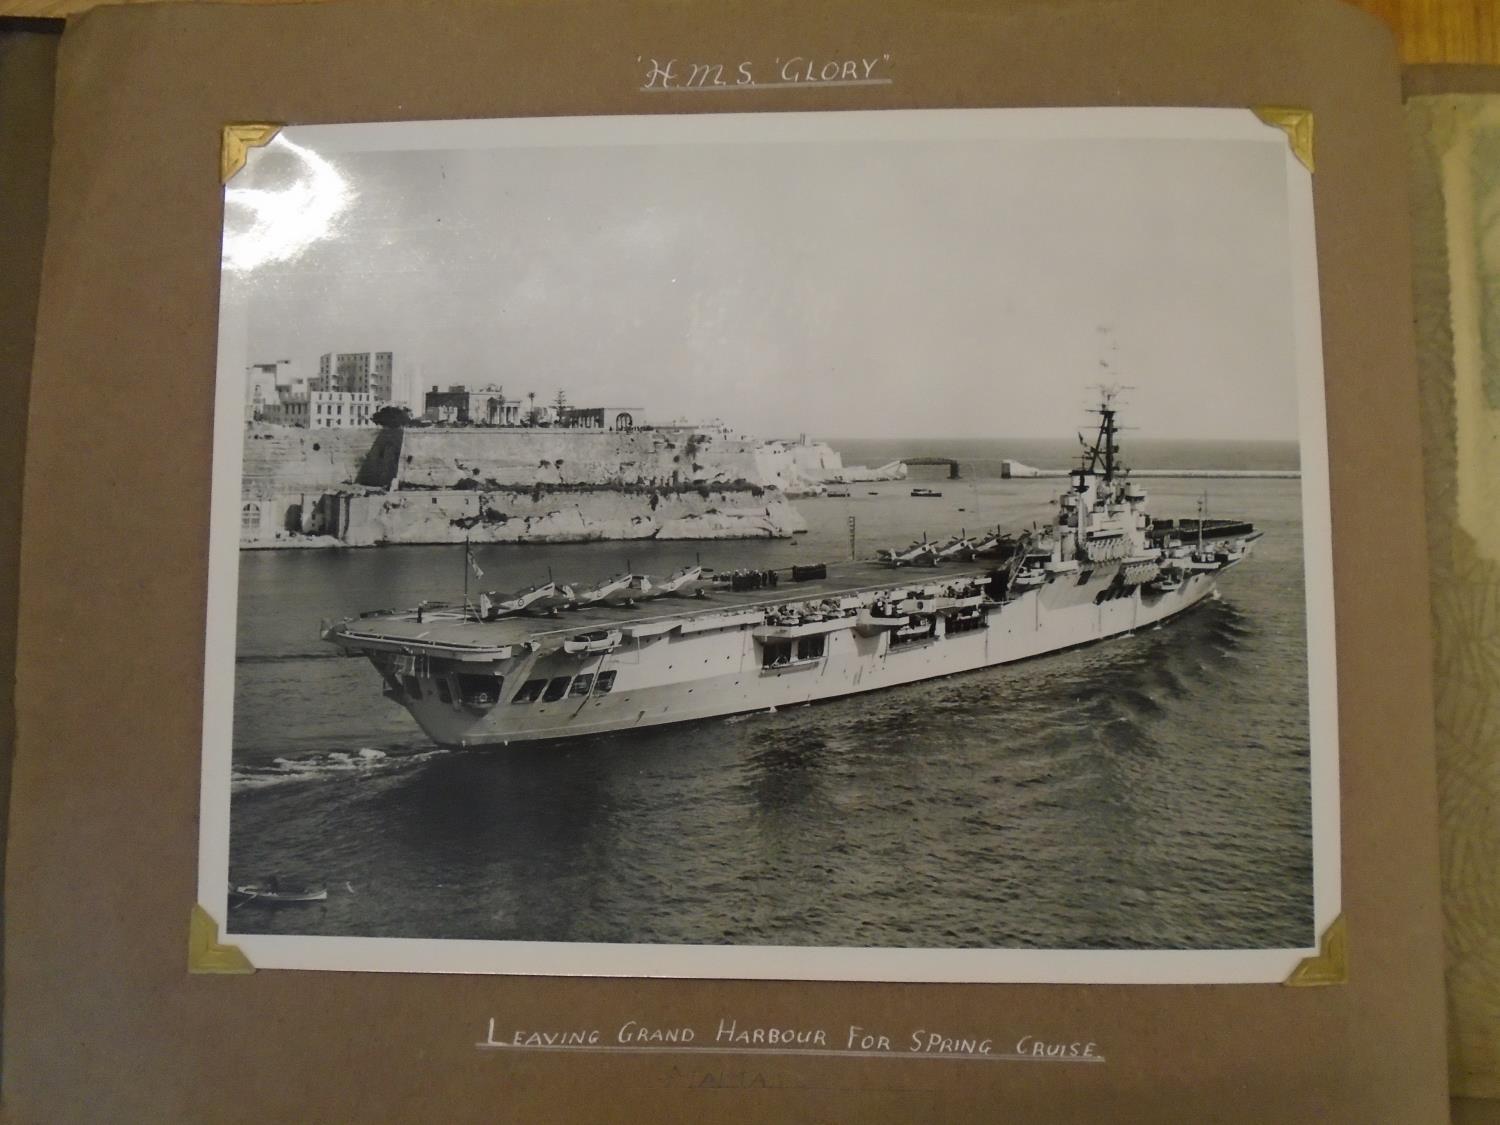 An interesting photograph album detailing a 'Spring Cruise' on board HMS Glory, an aircraft carrier, - Bild 2 aus 16